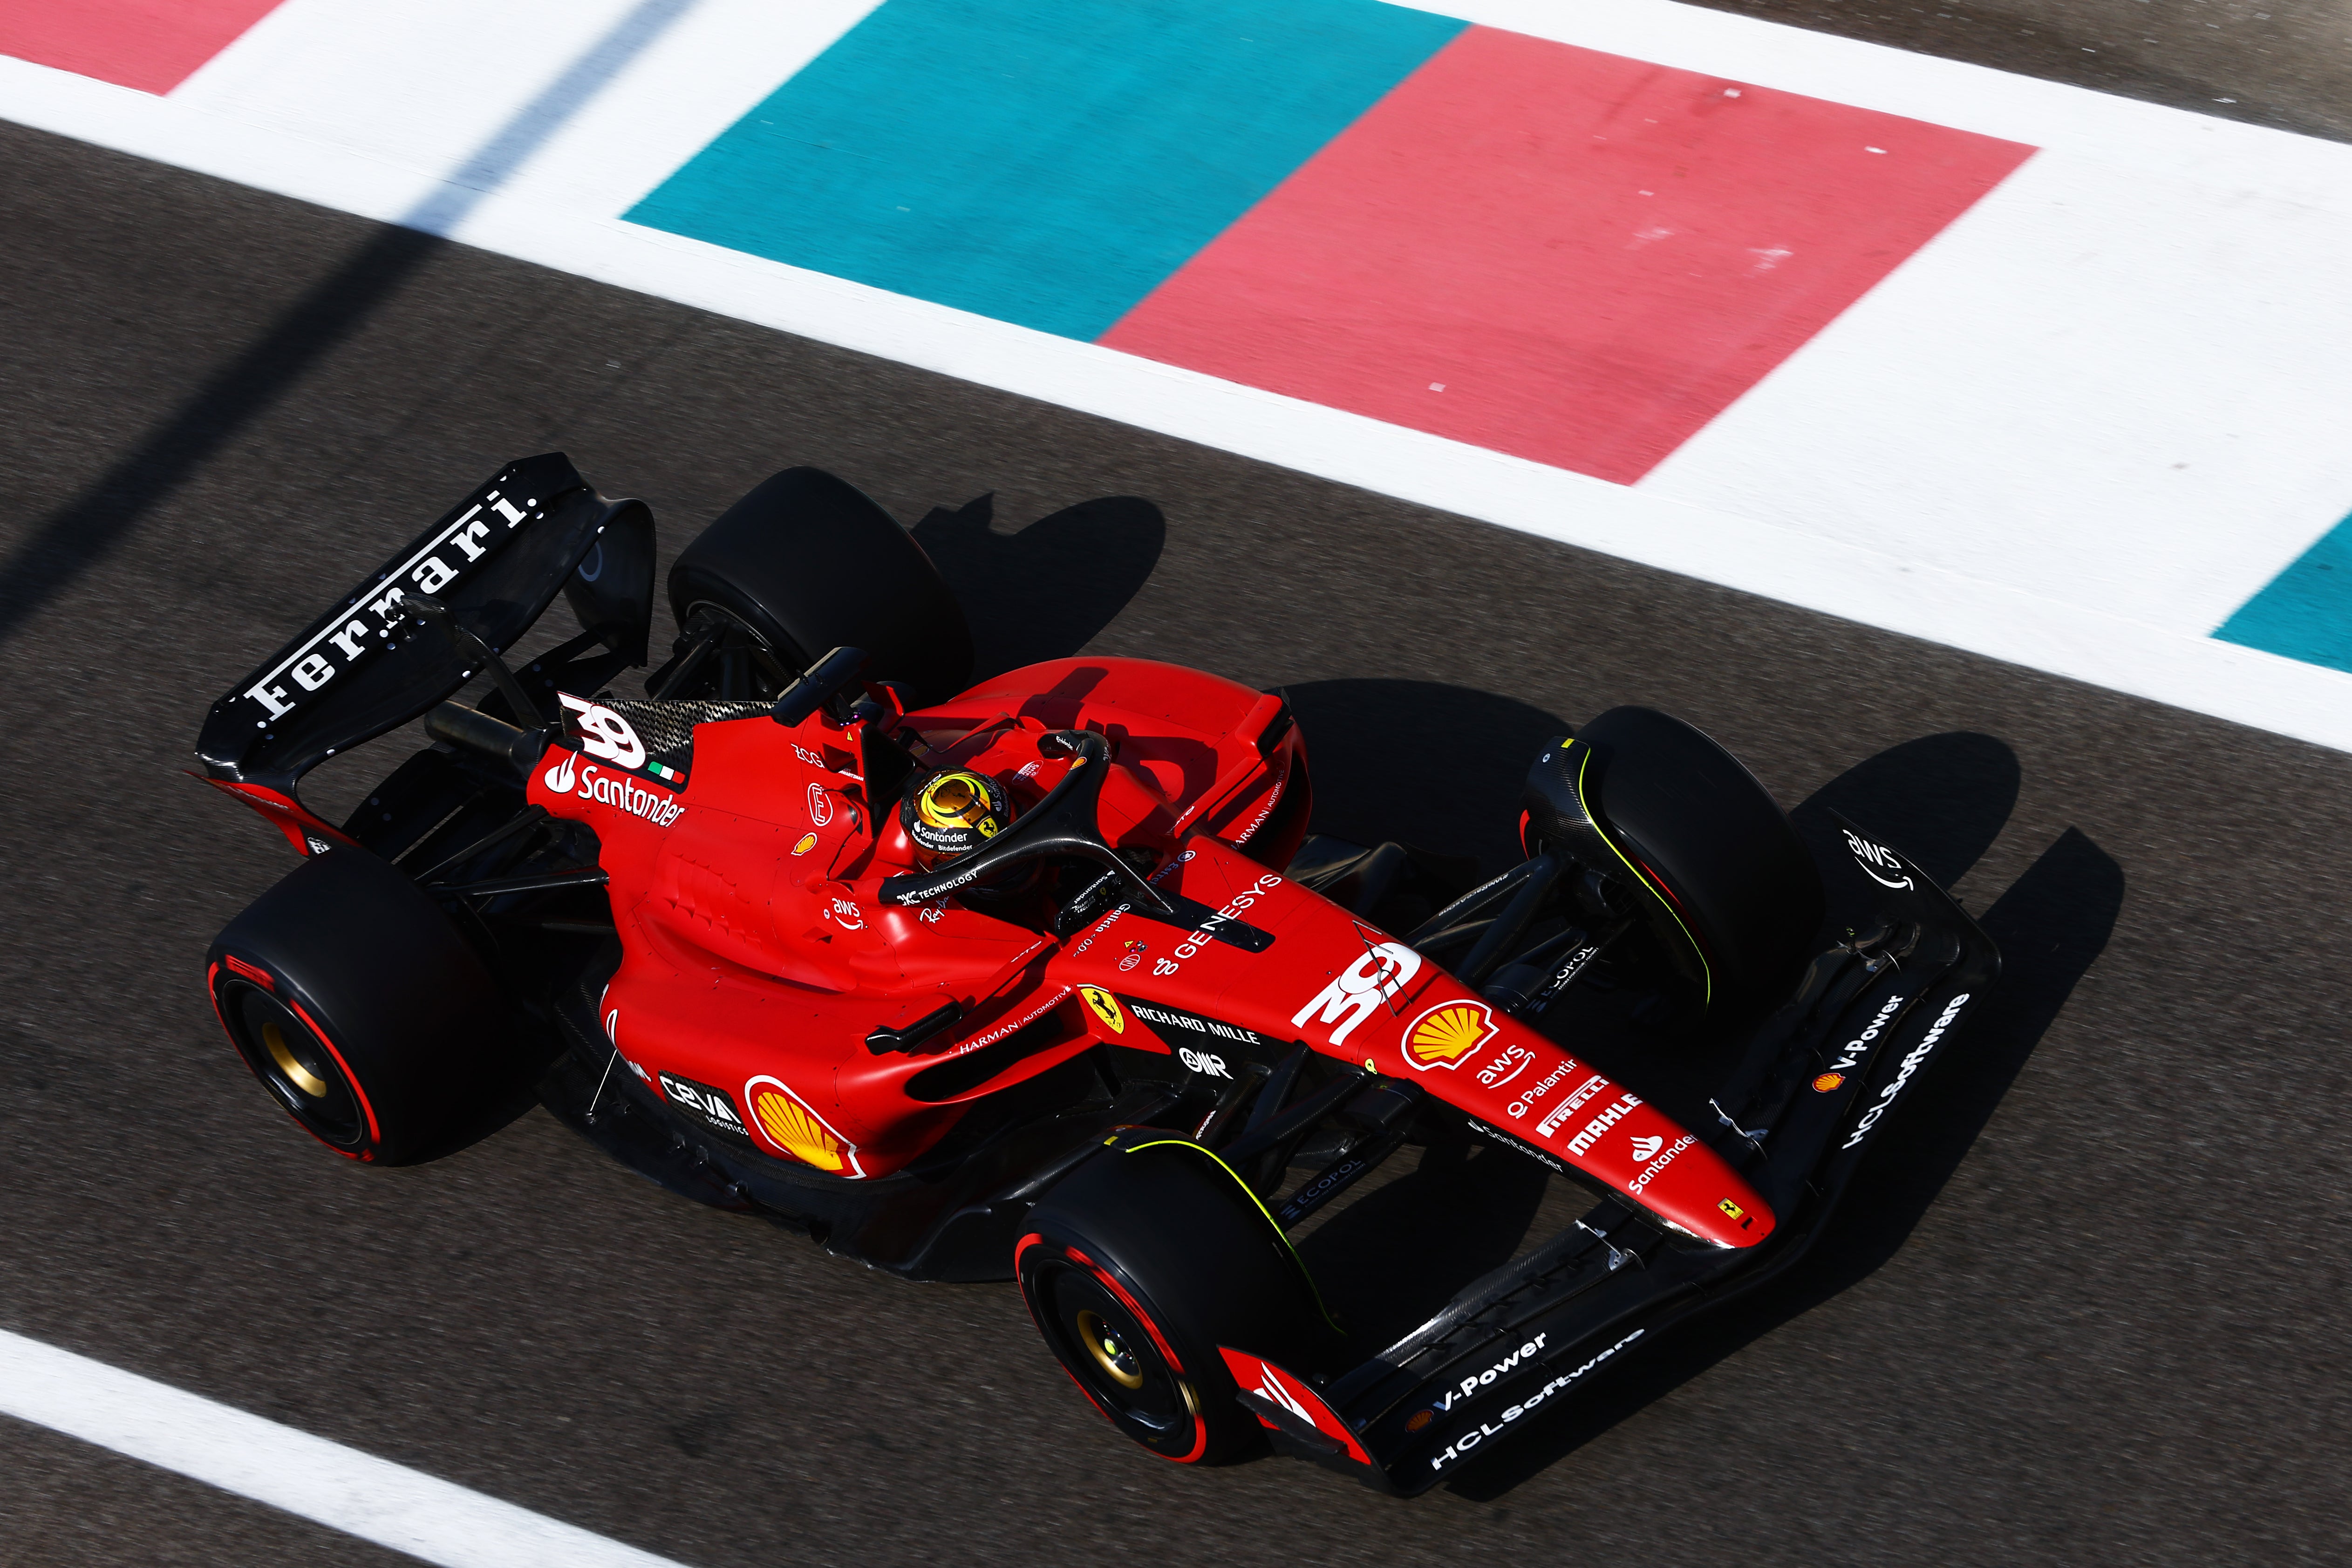 Ferrari were the first team to reveal their car launch date - Tuesday 13 February